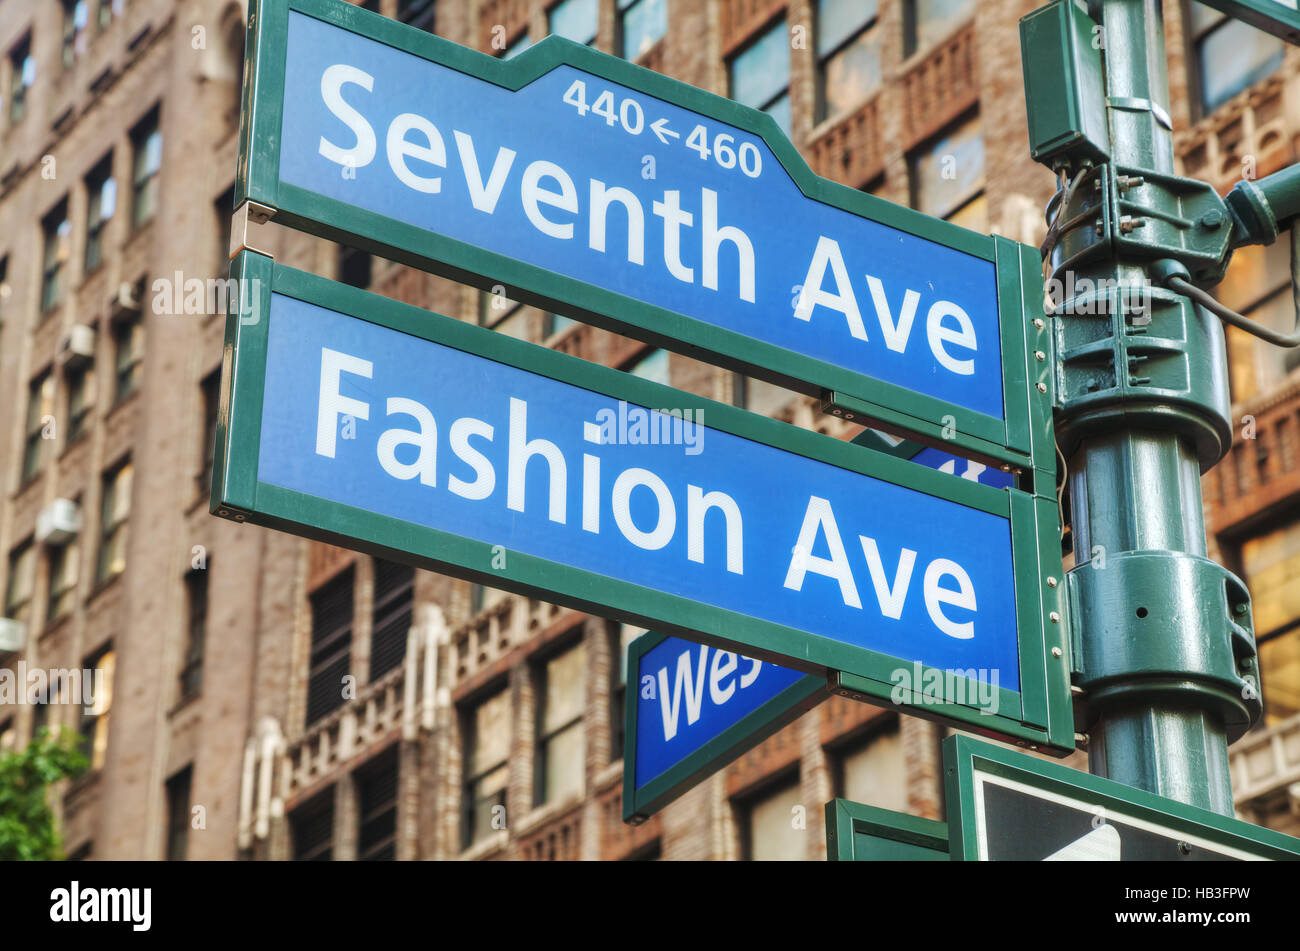 Seventh avenue sign Stock Photo